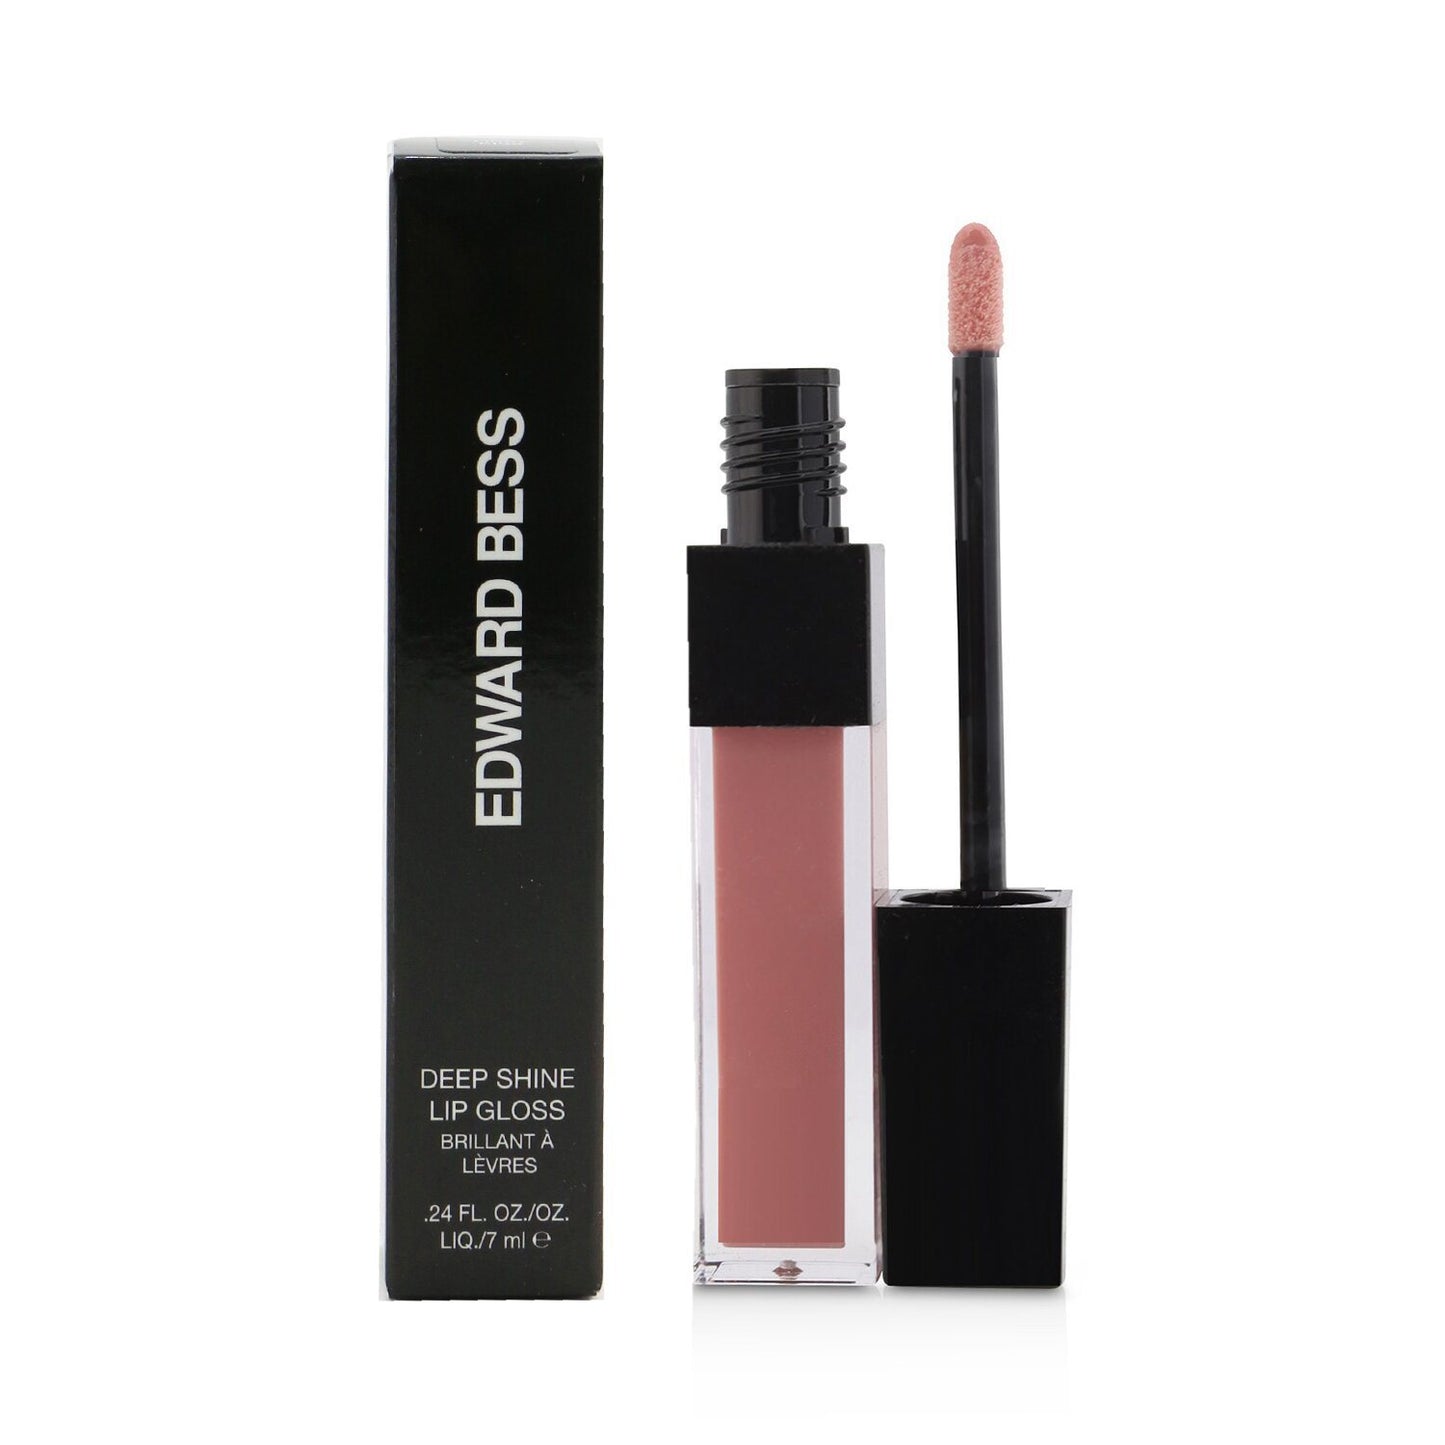 Deep Shine Lip Gloss - # French Lace